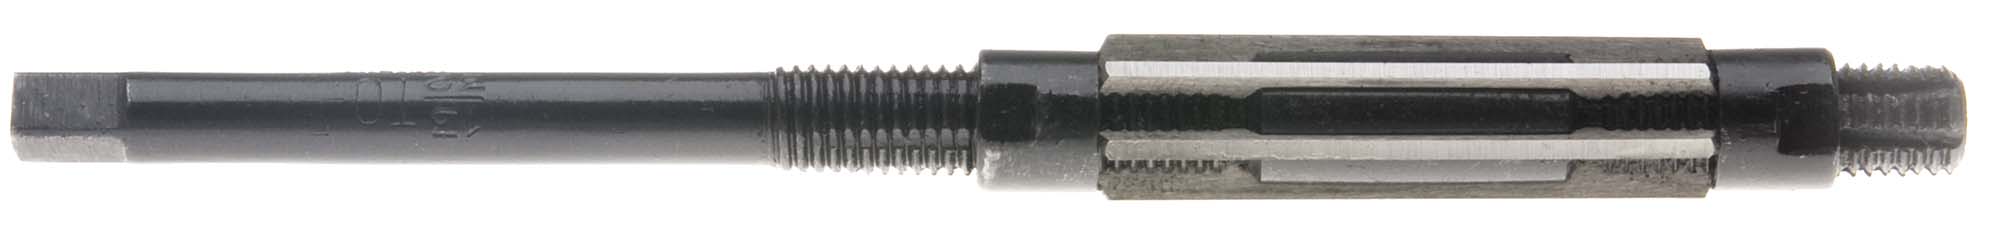 RMBL-5A High Speed Steel Adjustable Blade Reamer, 11/32"-3/8"